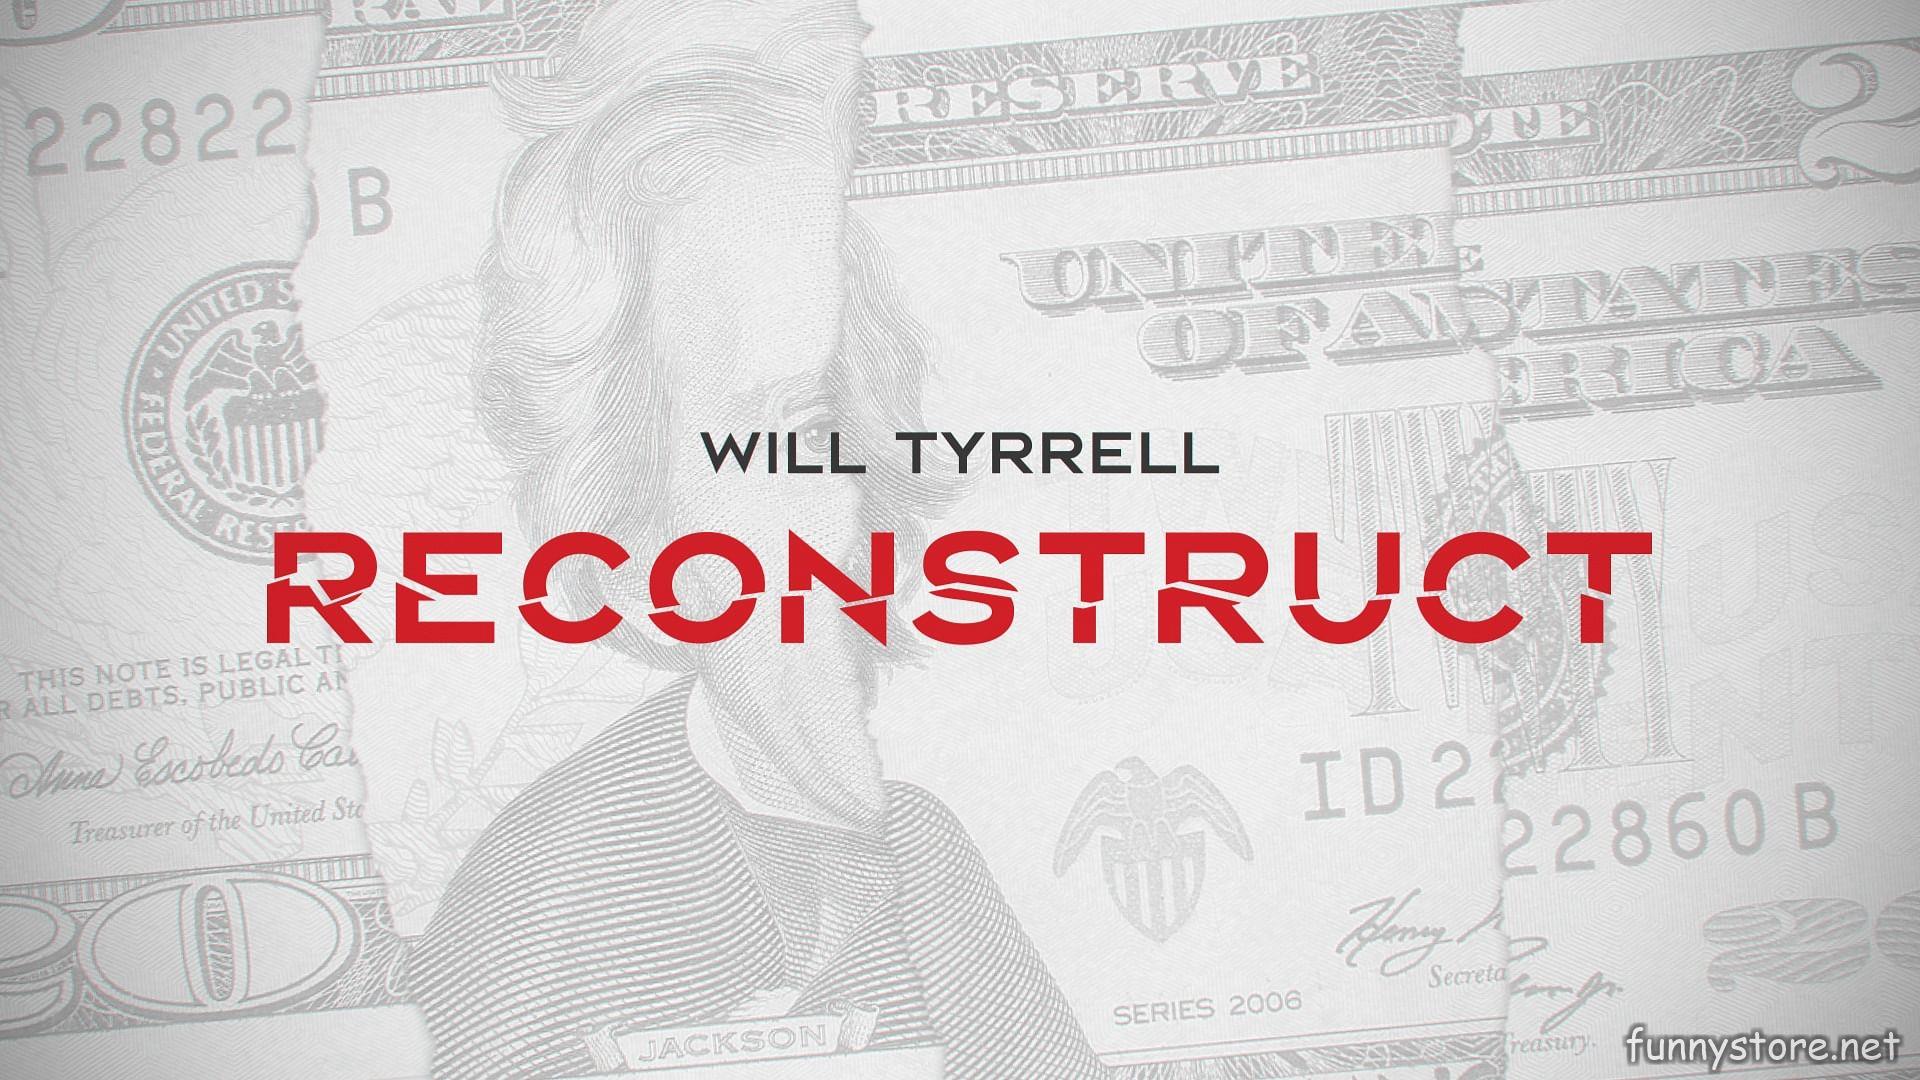 William Tyrrell - Reconstruct